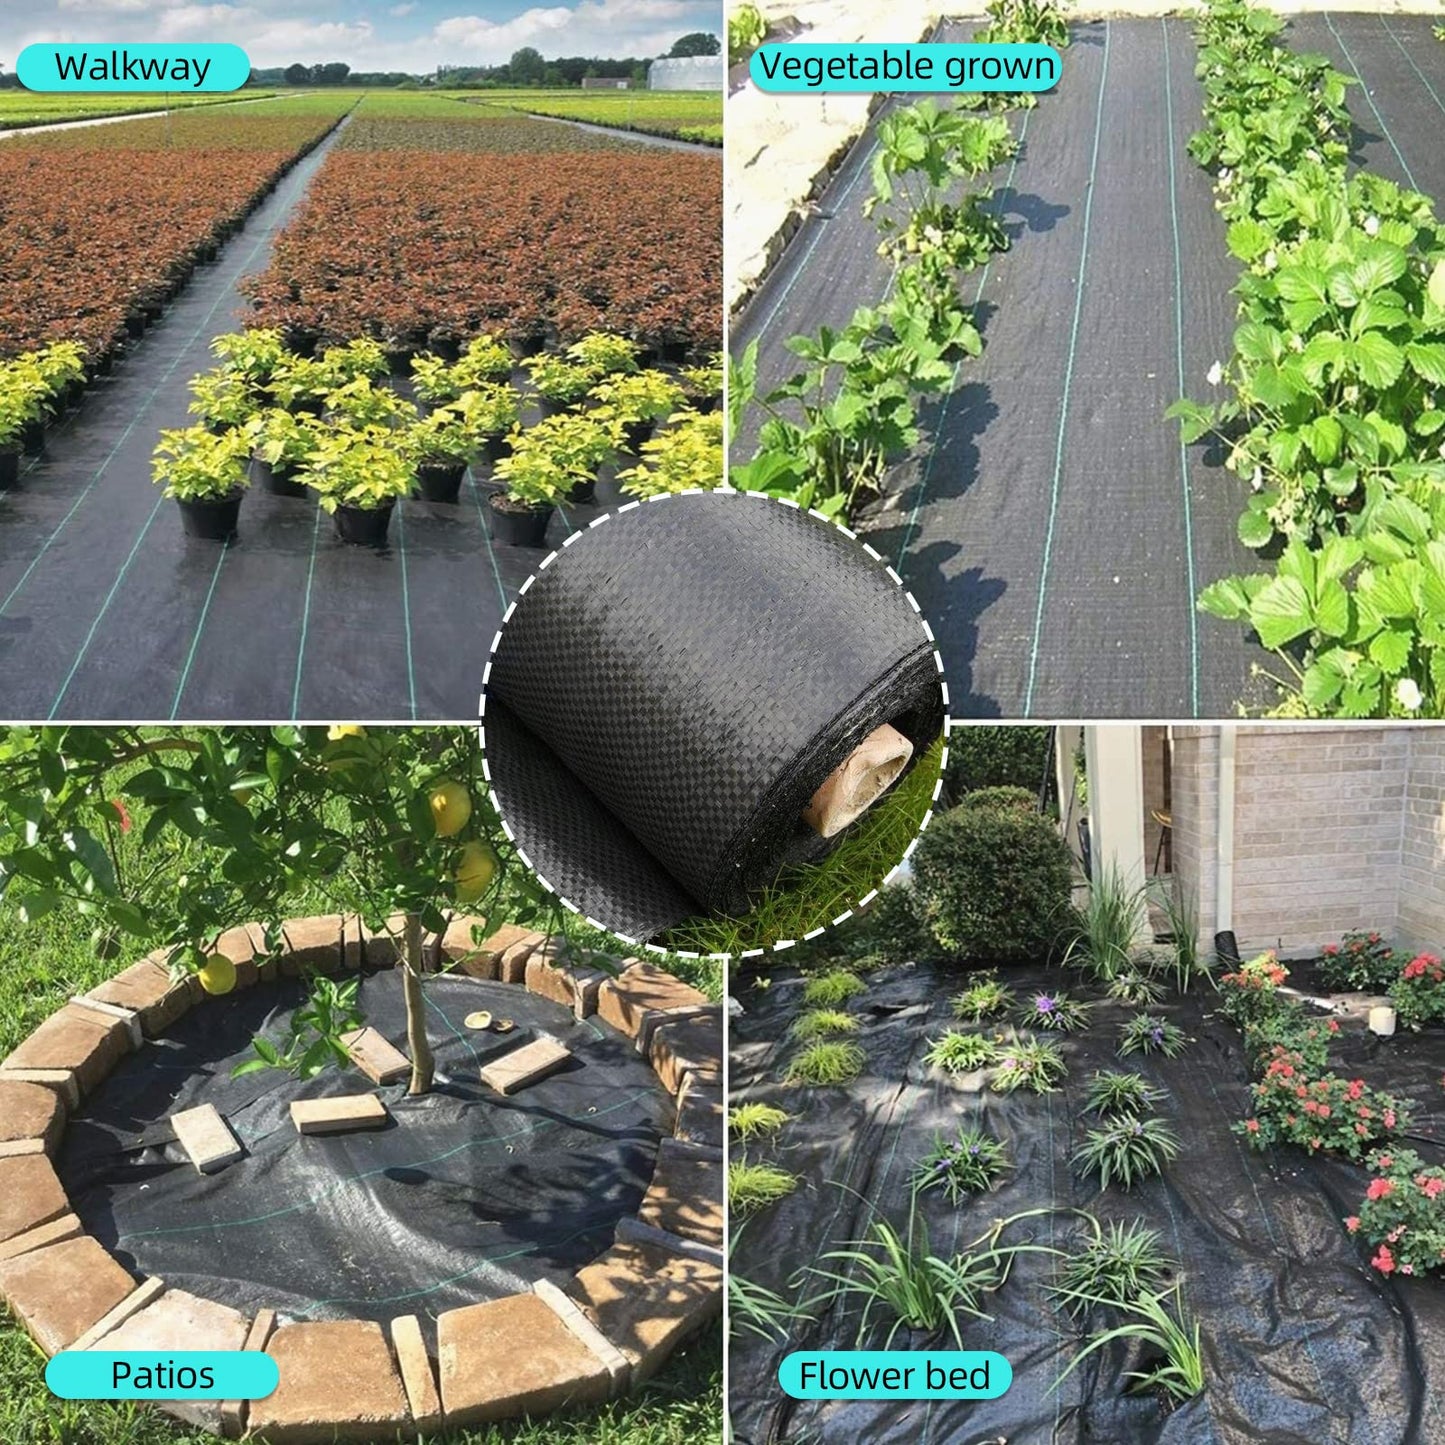 GARVEE 3oz 6.5ft x 300ft Weed Barrier Landscape Fabric Heavy Duty Premium  Ground Cover Weed Block Gardening Mat